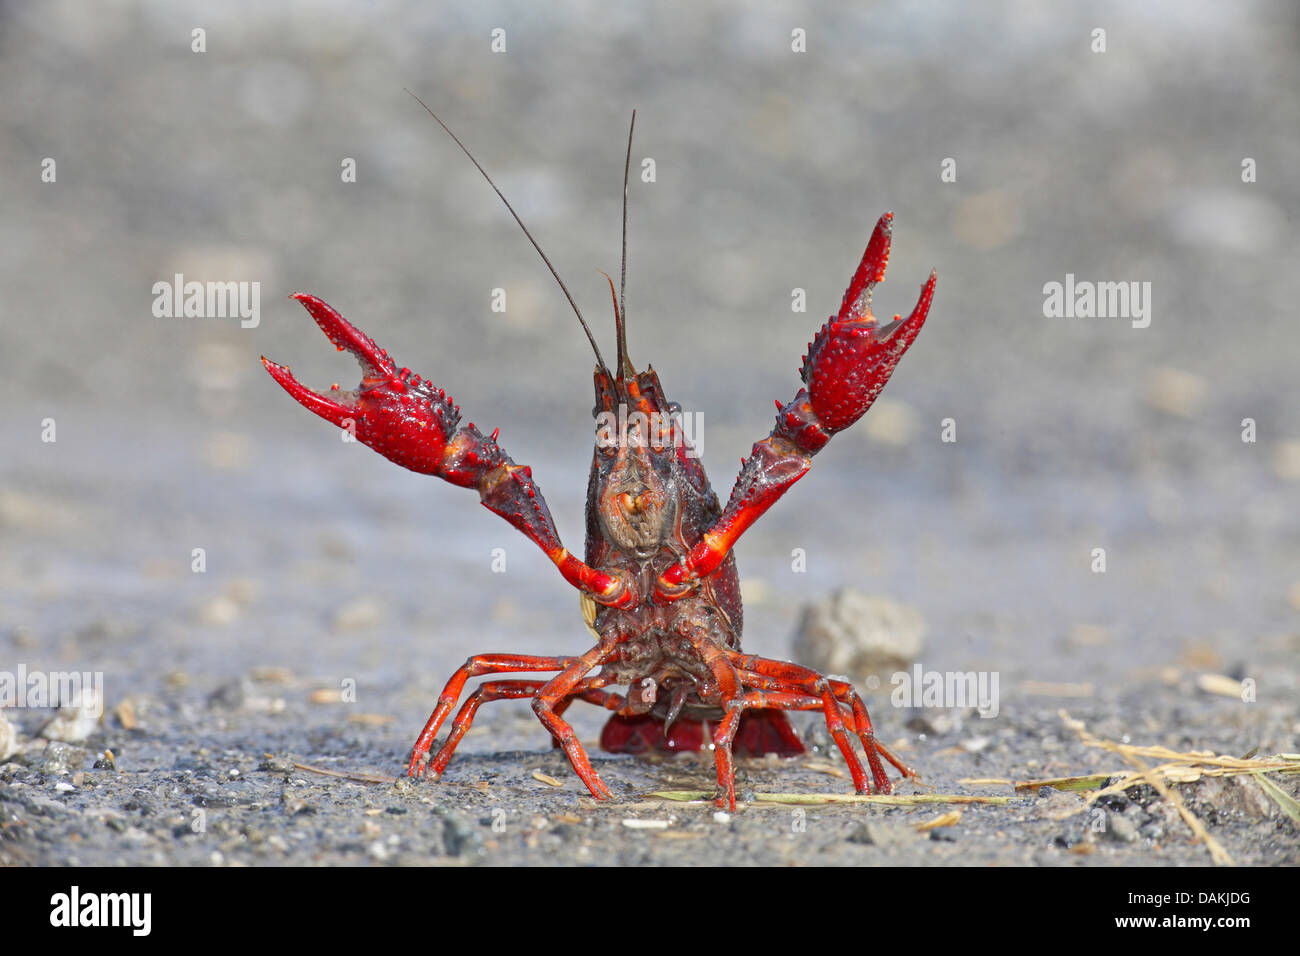 Louisiana red crayfish, red swamp crayfish, Louisiana swamp crayfish, red crayfish (Procambarus clarkii), threatening, Spain, Andalusia, Guadalquivir Stock Photo